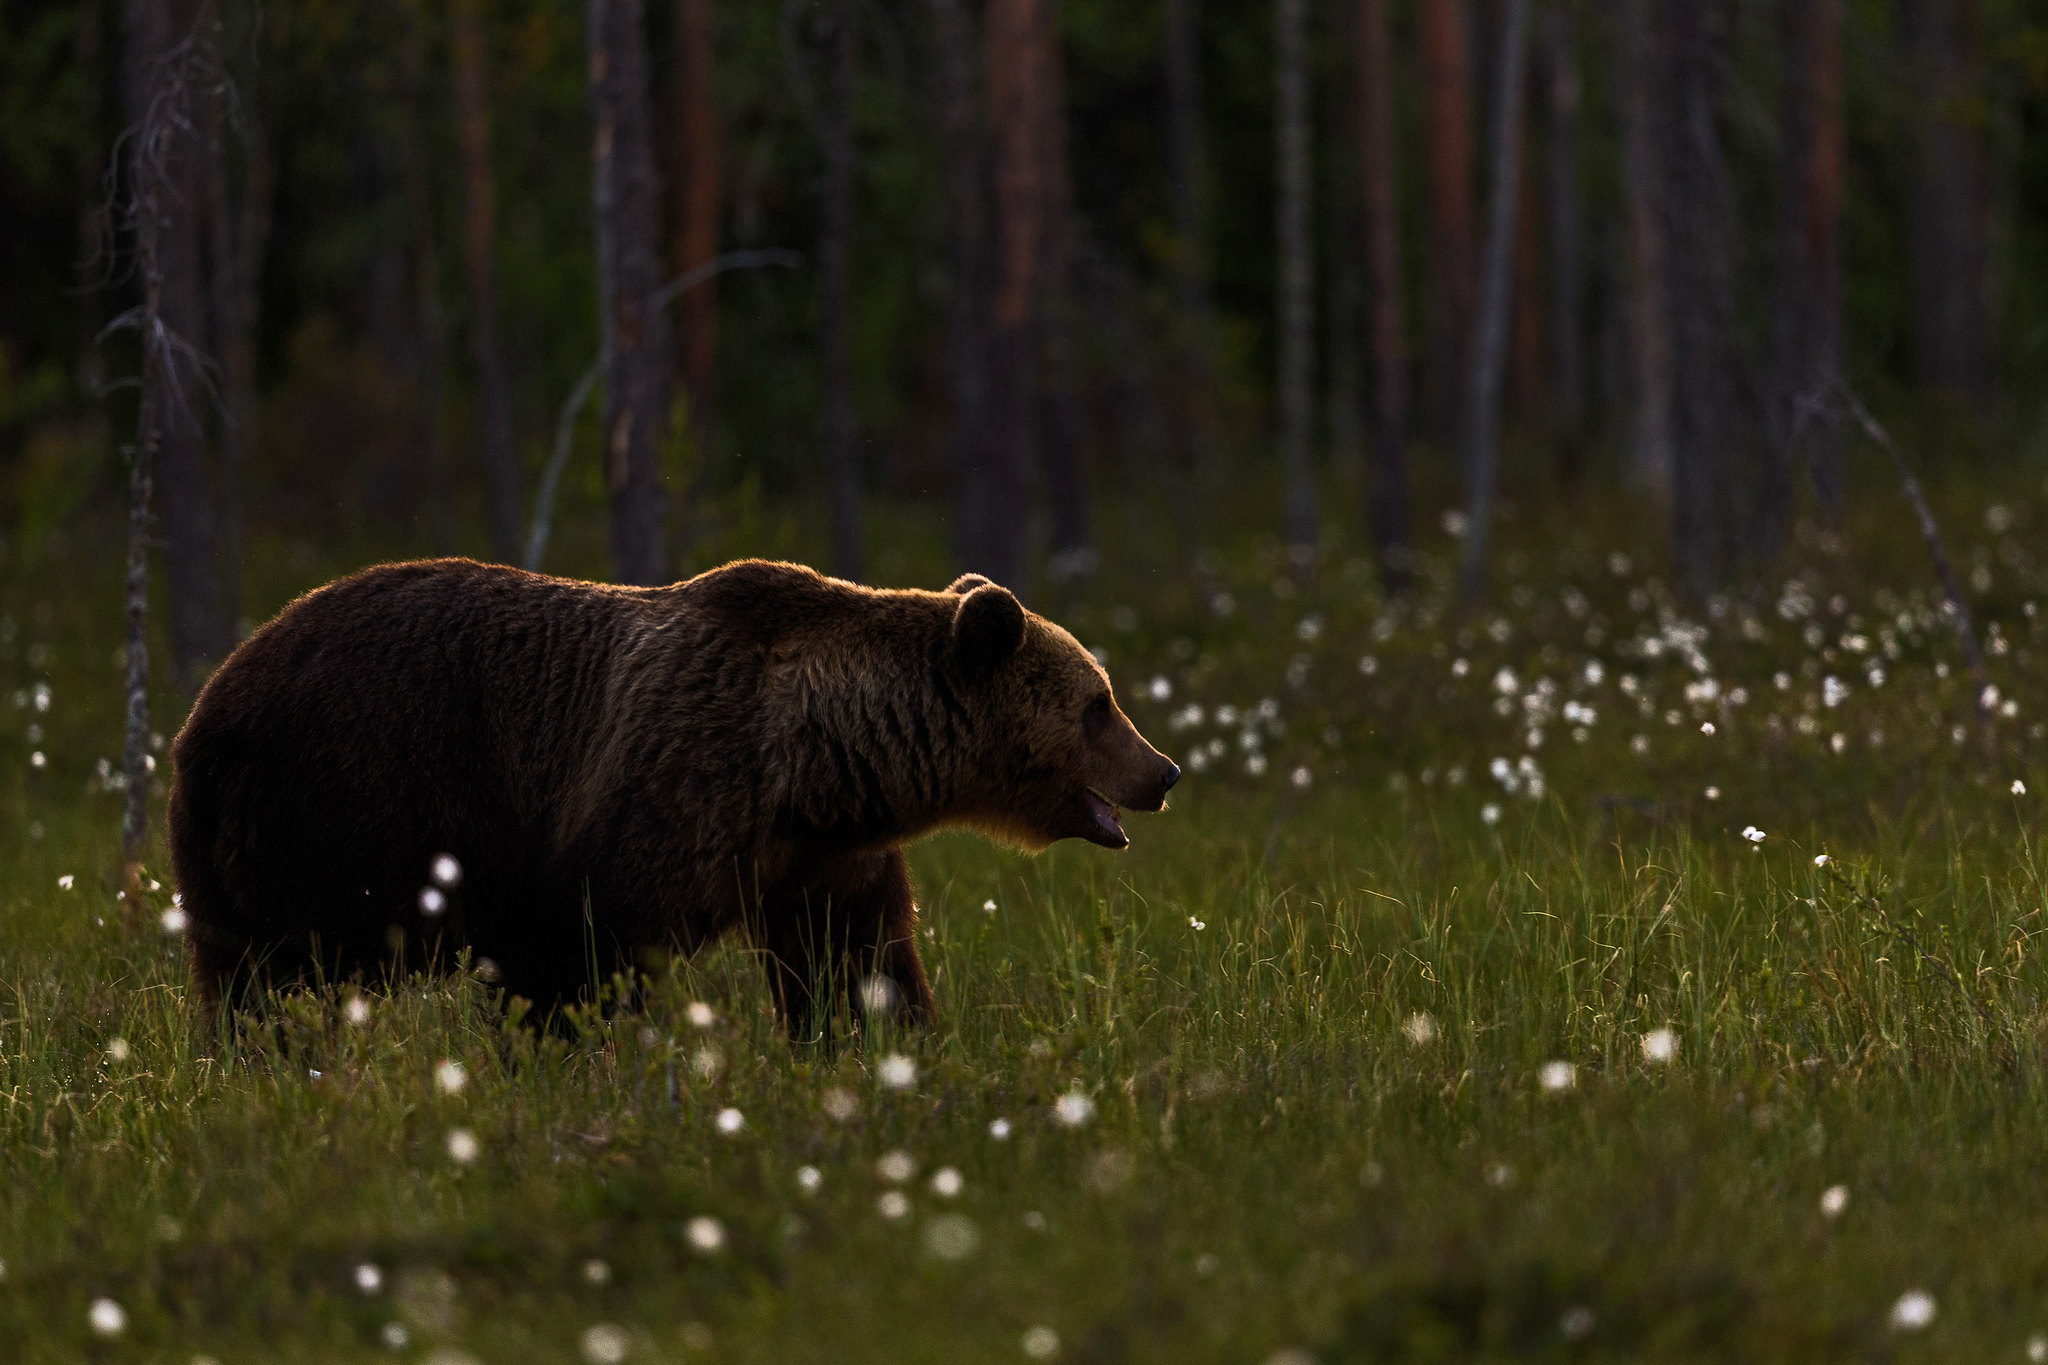 Brown Bear - Bears in Finland